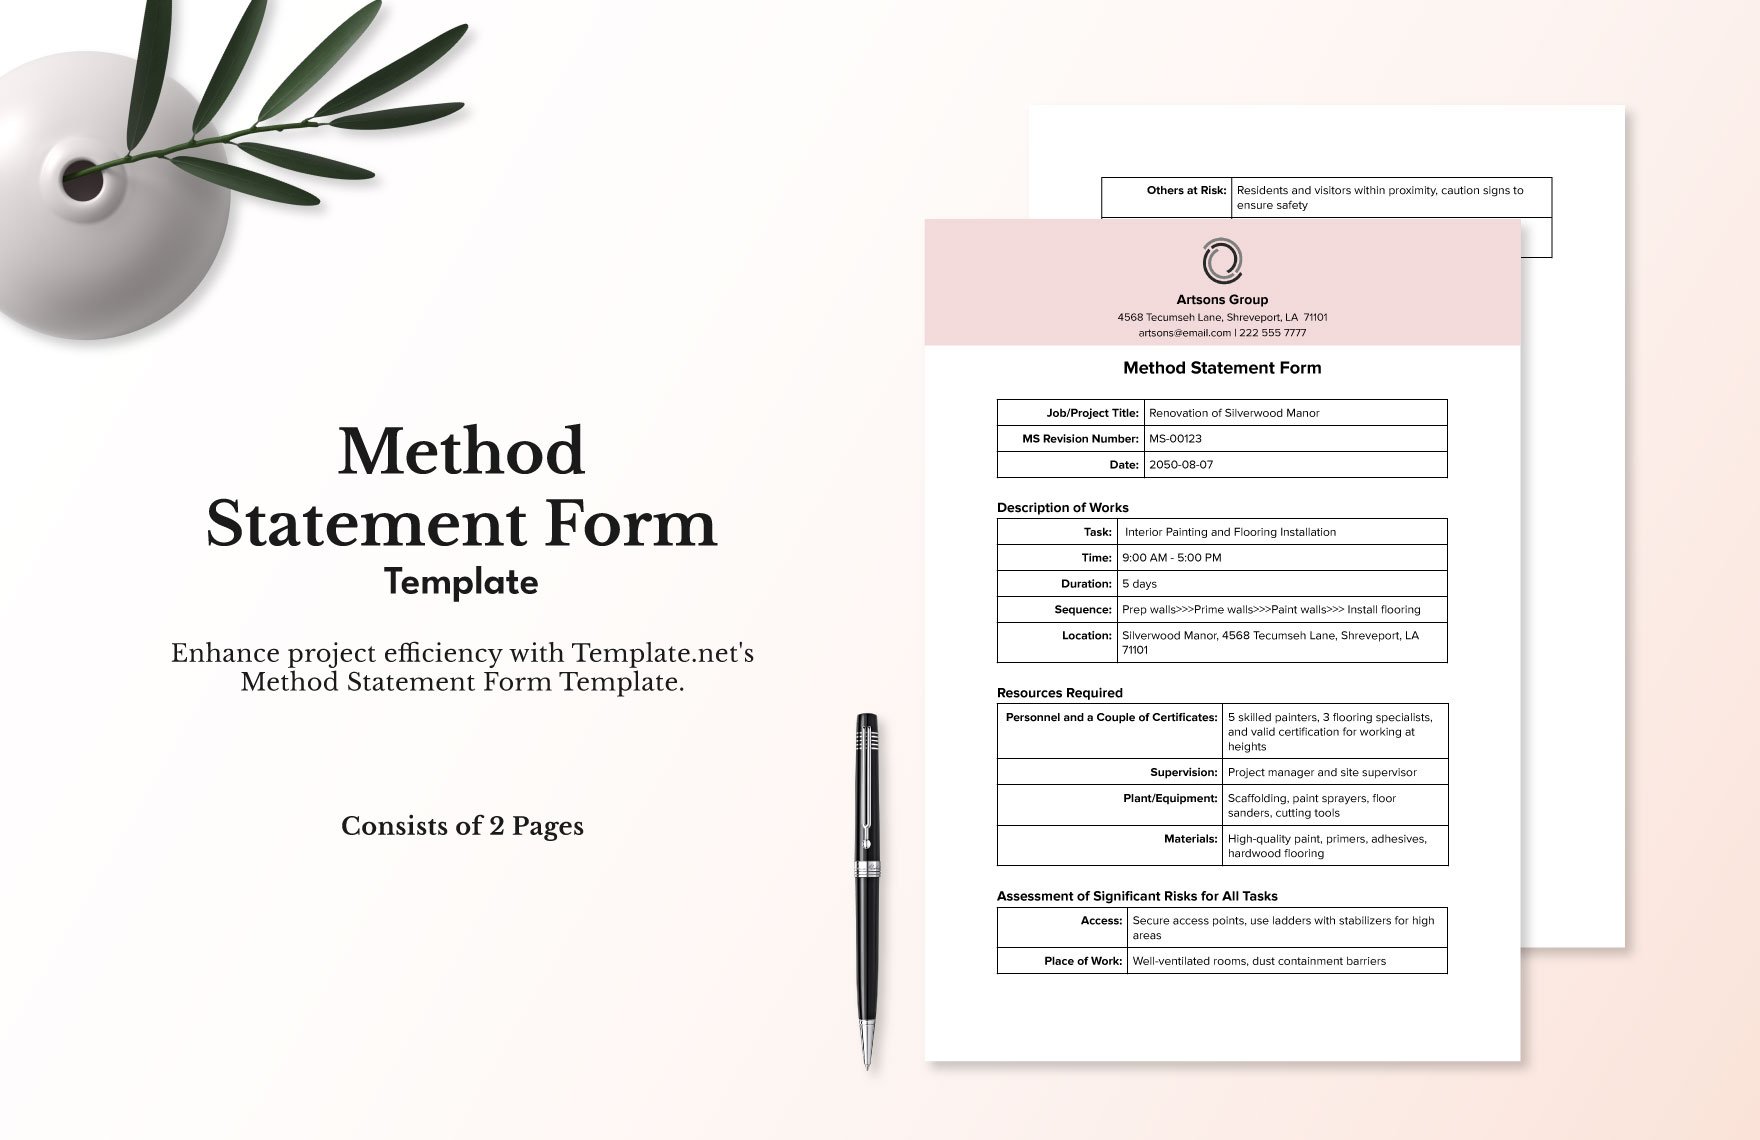 Method Statement Form Template